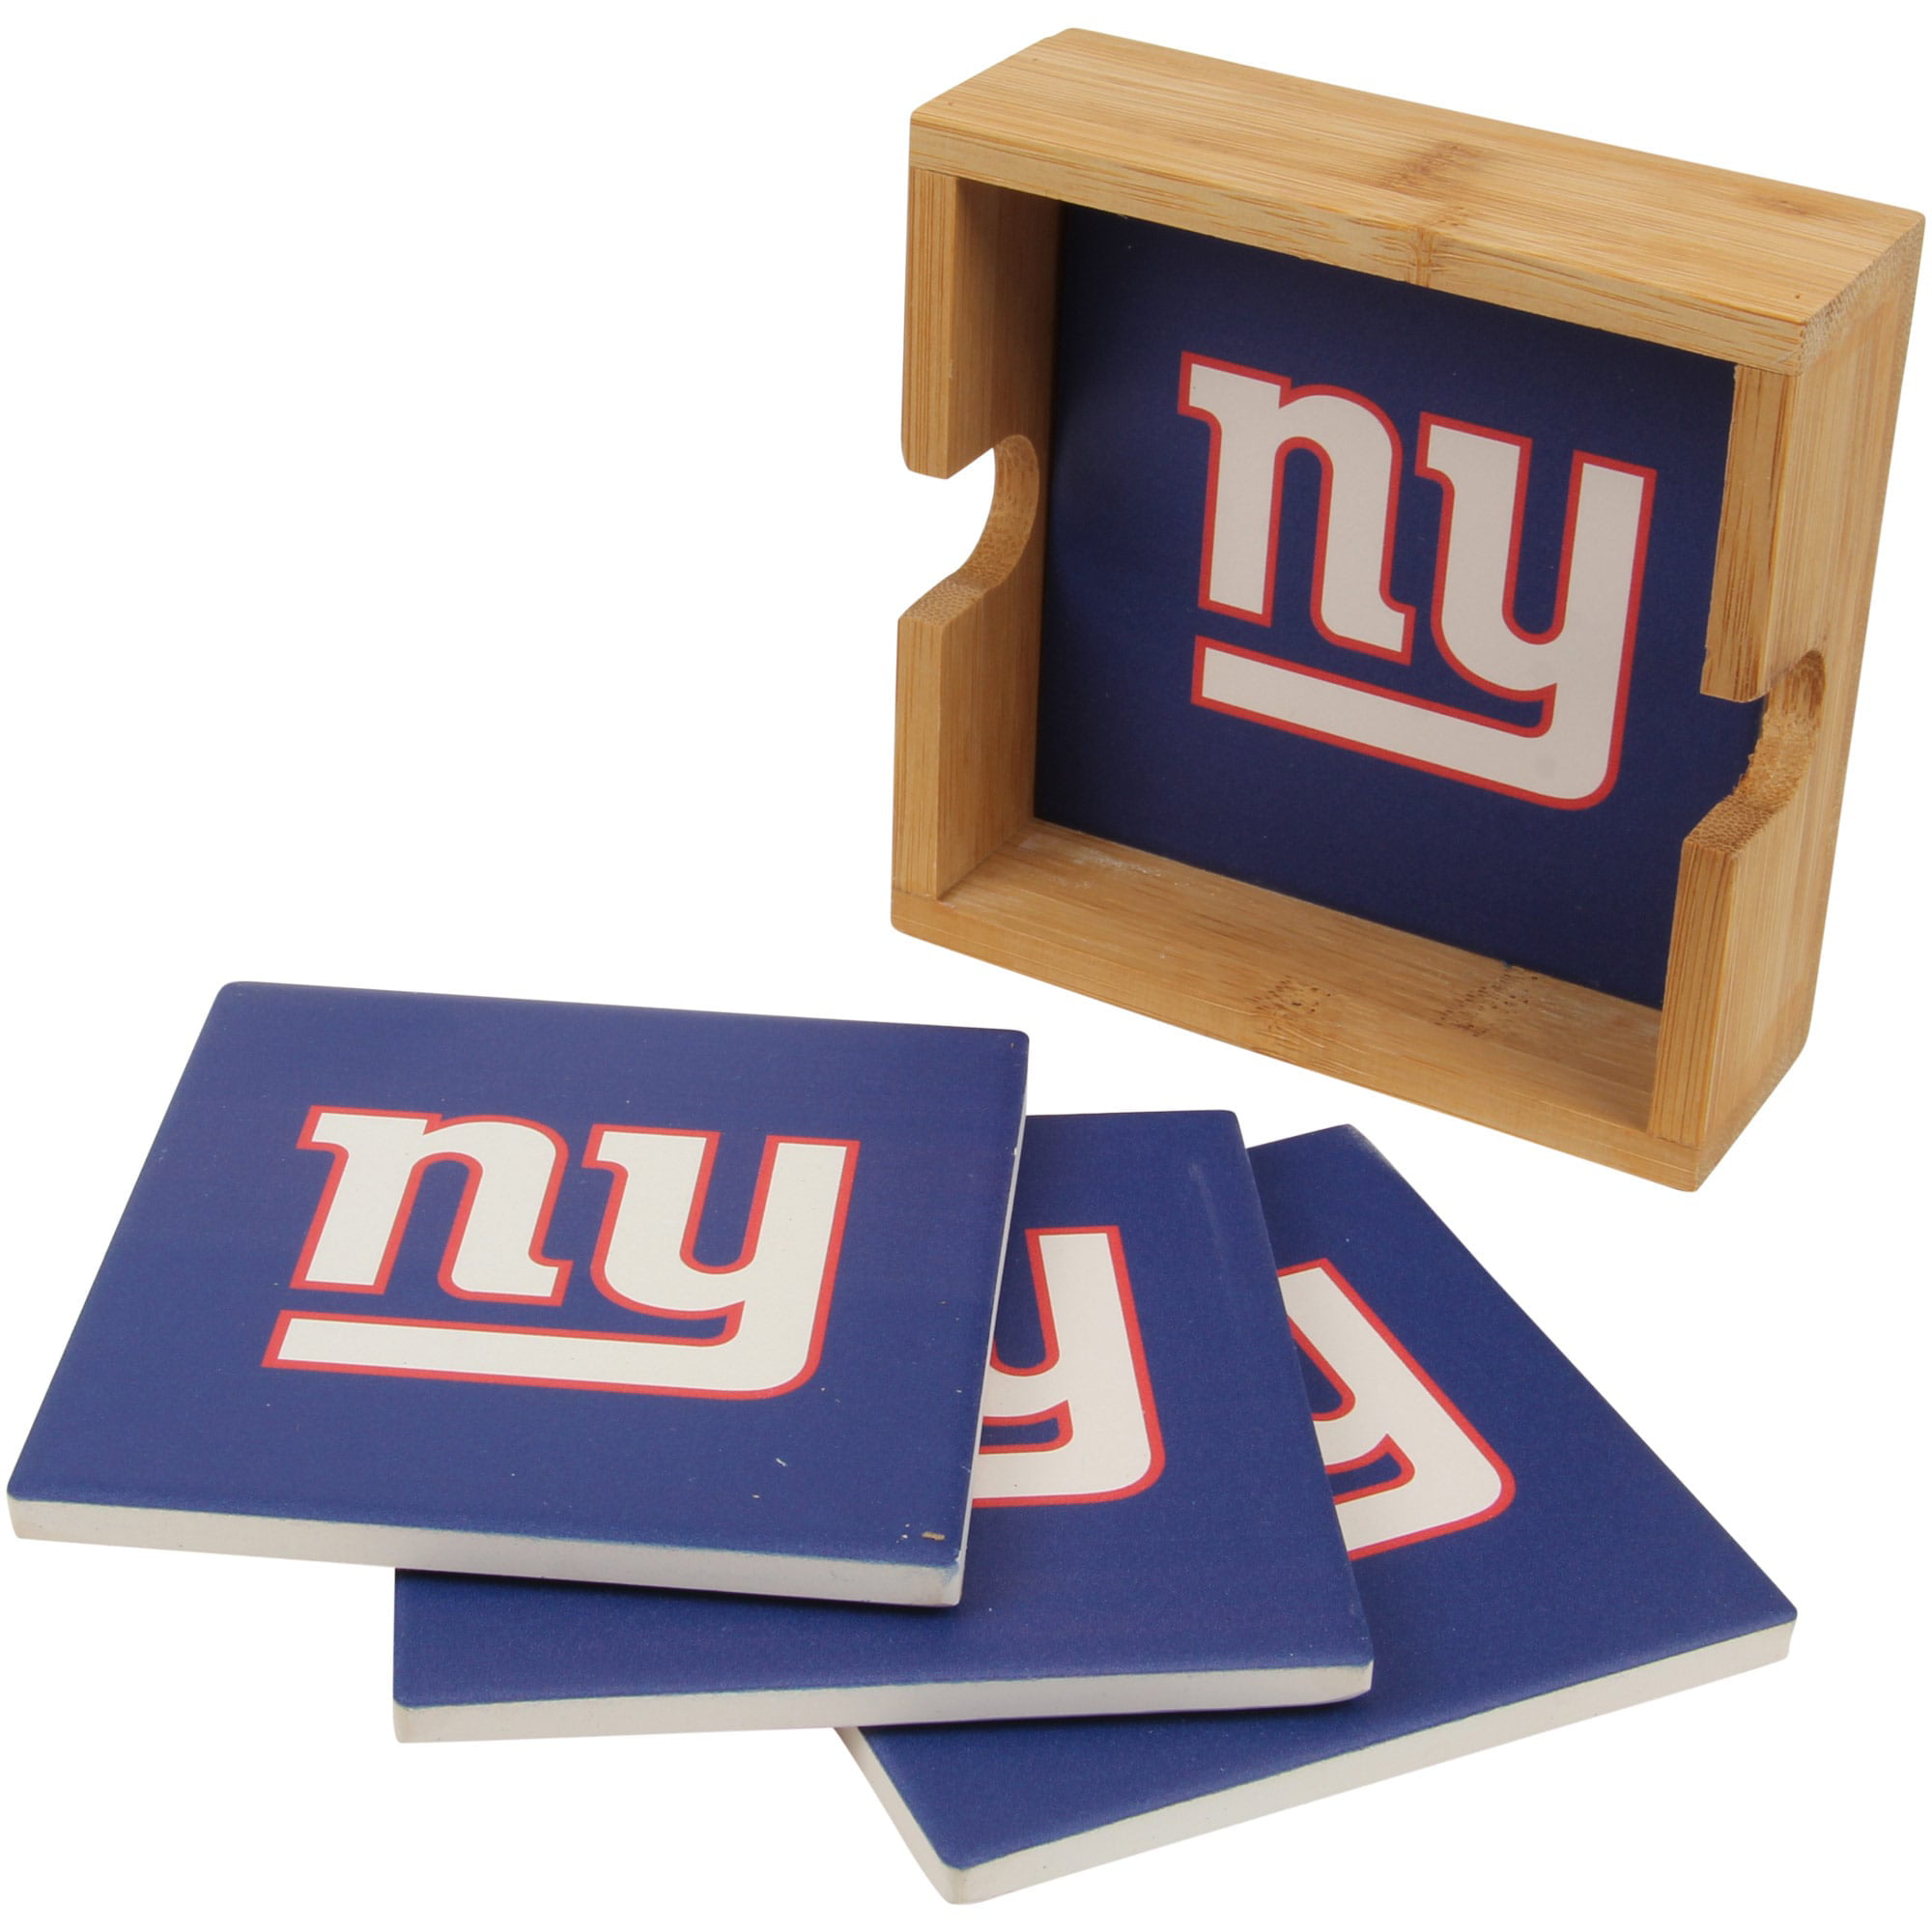 4 Pack New York Giants Coaster Set